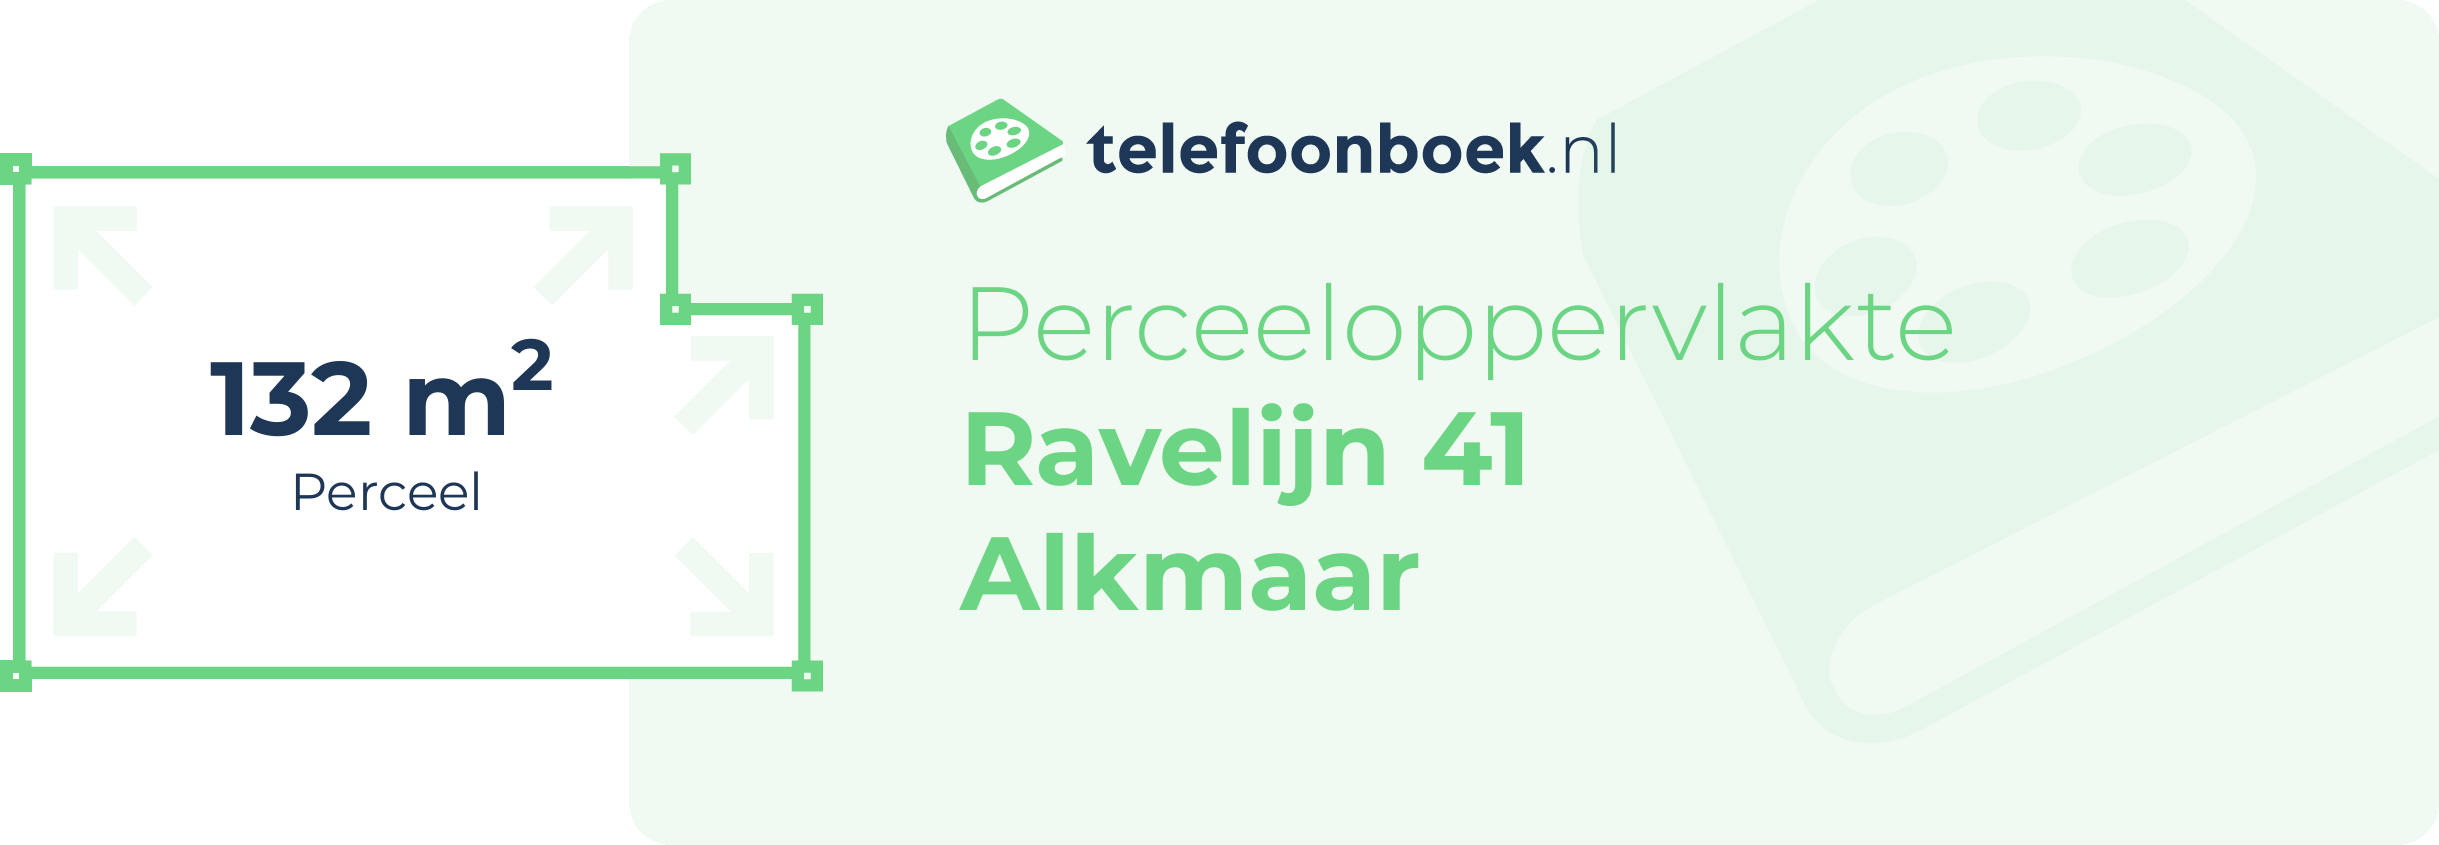 Perceeloppervlakte Ravelijn 41 Alkmaar